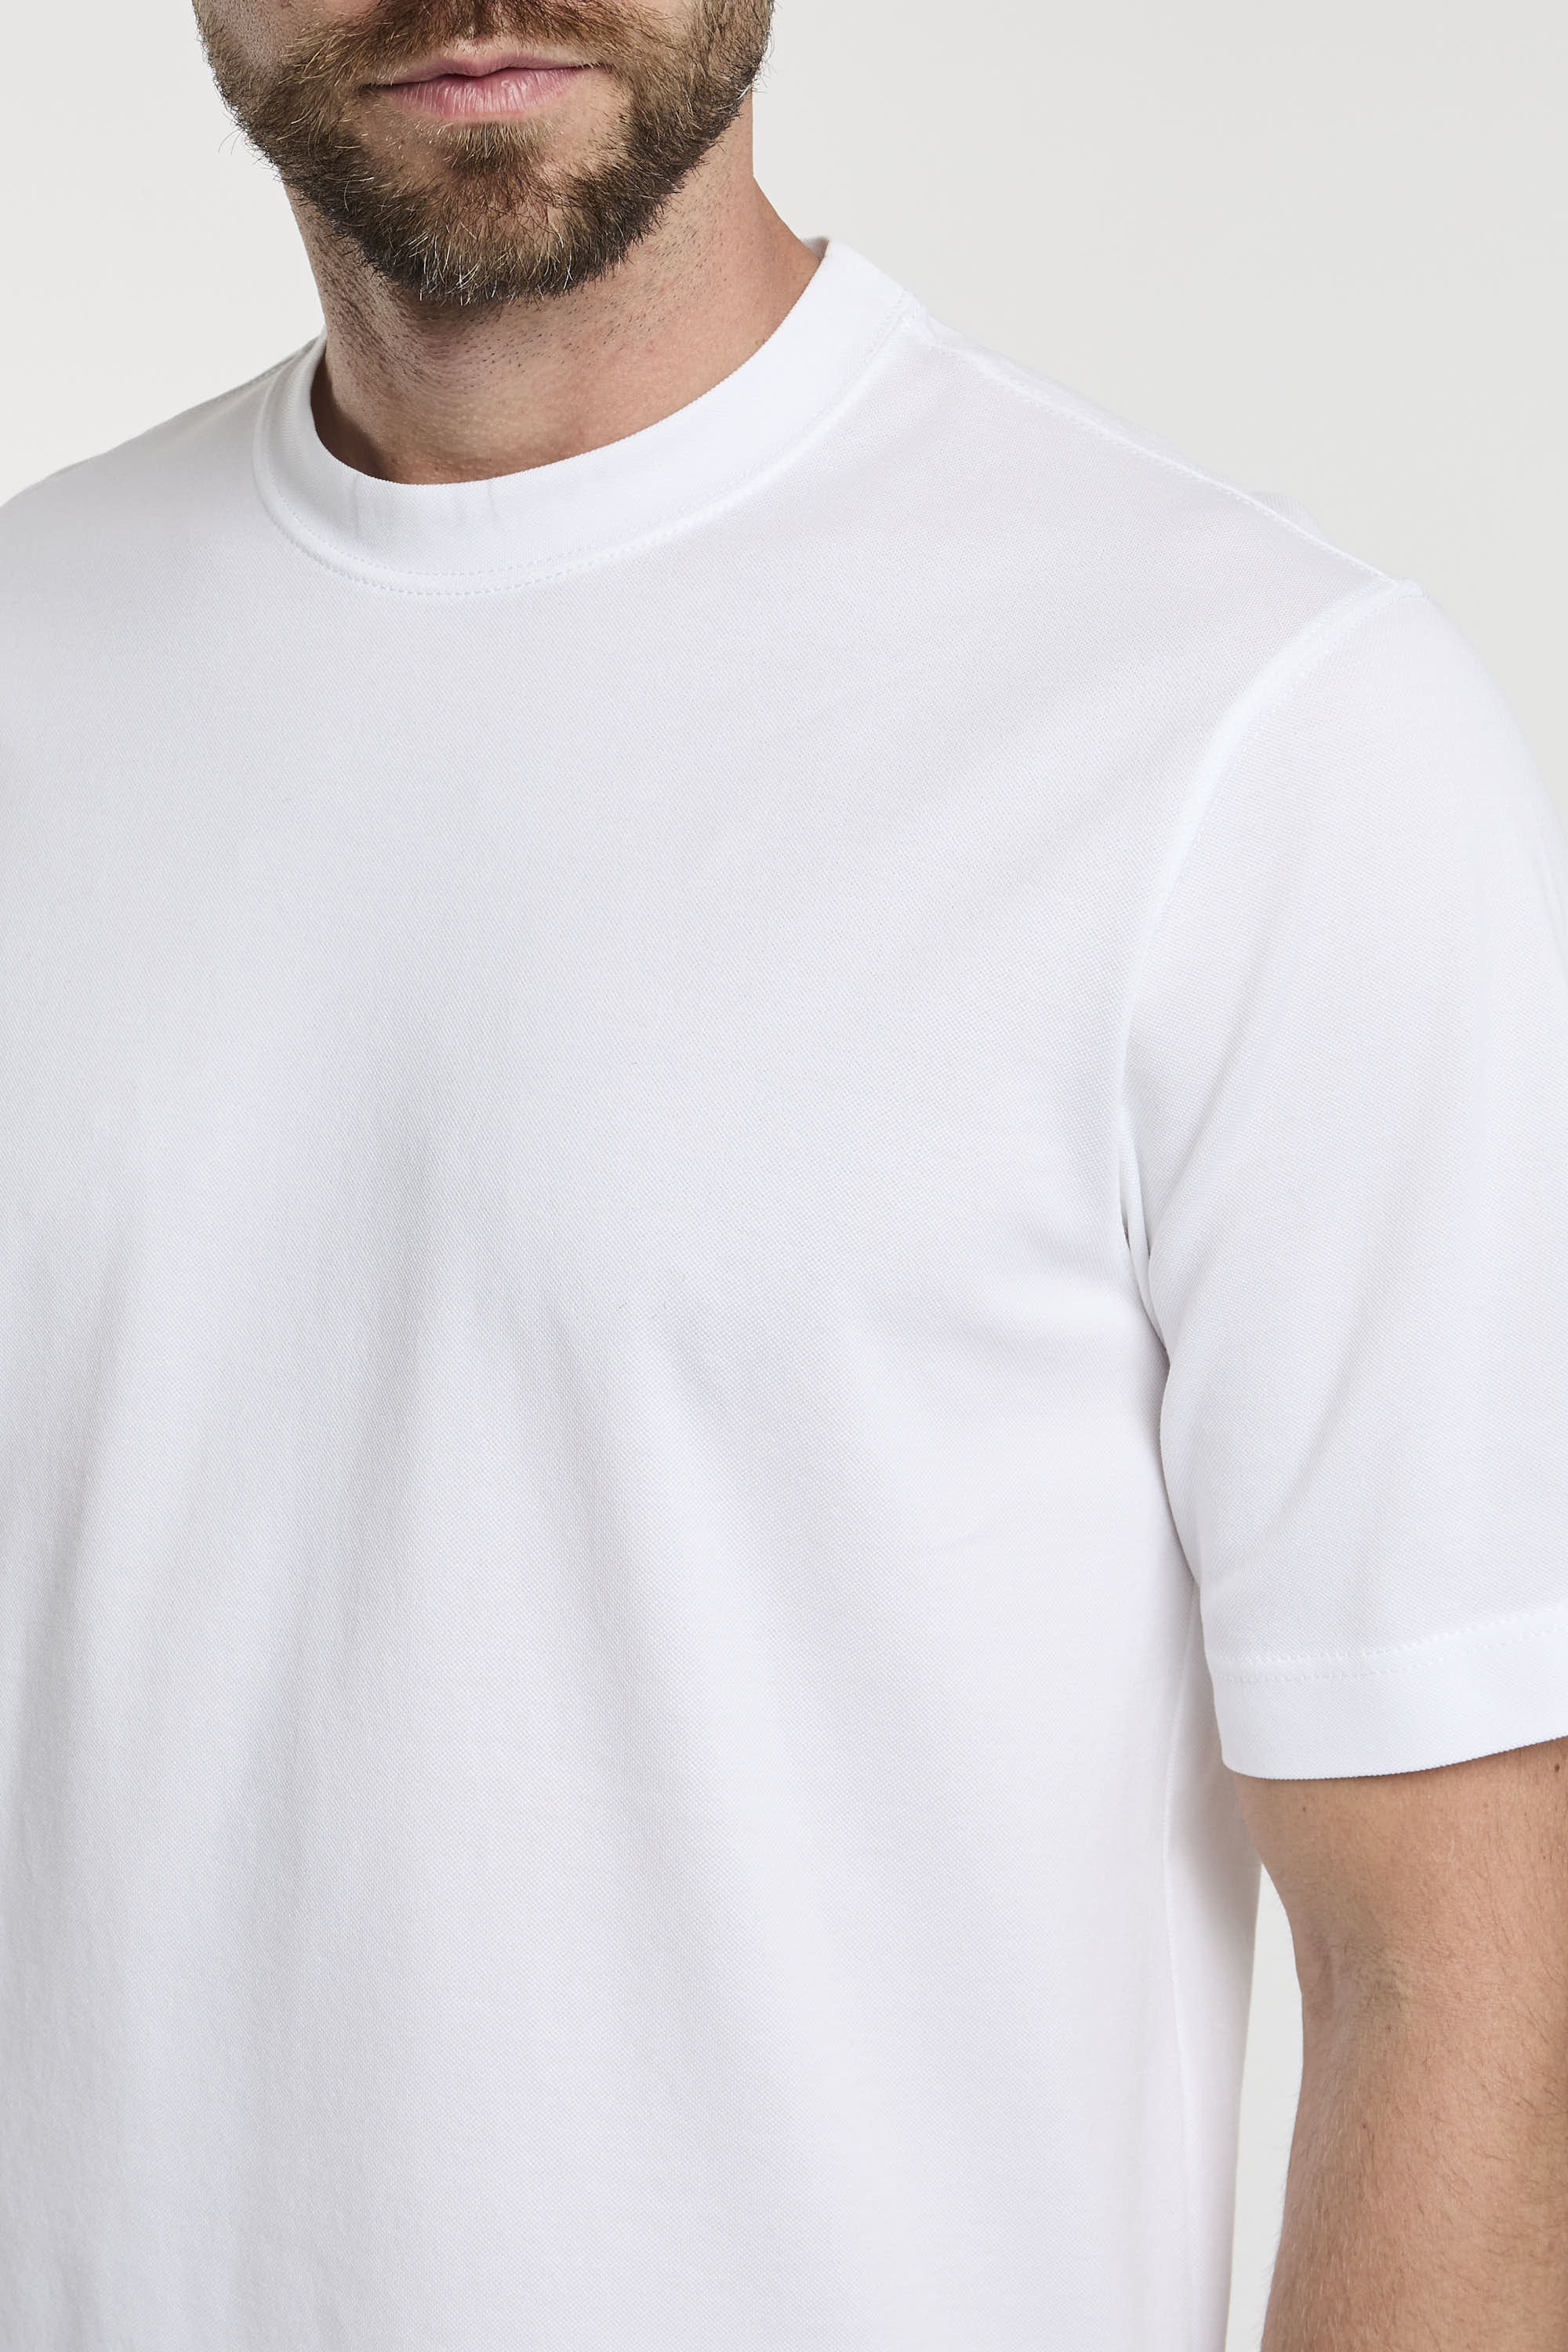 Circolo 1901 T-Shirt Cotton White 6505-2